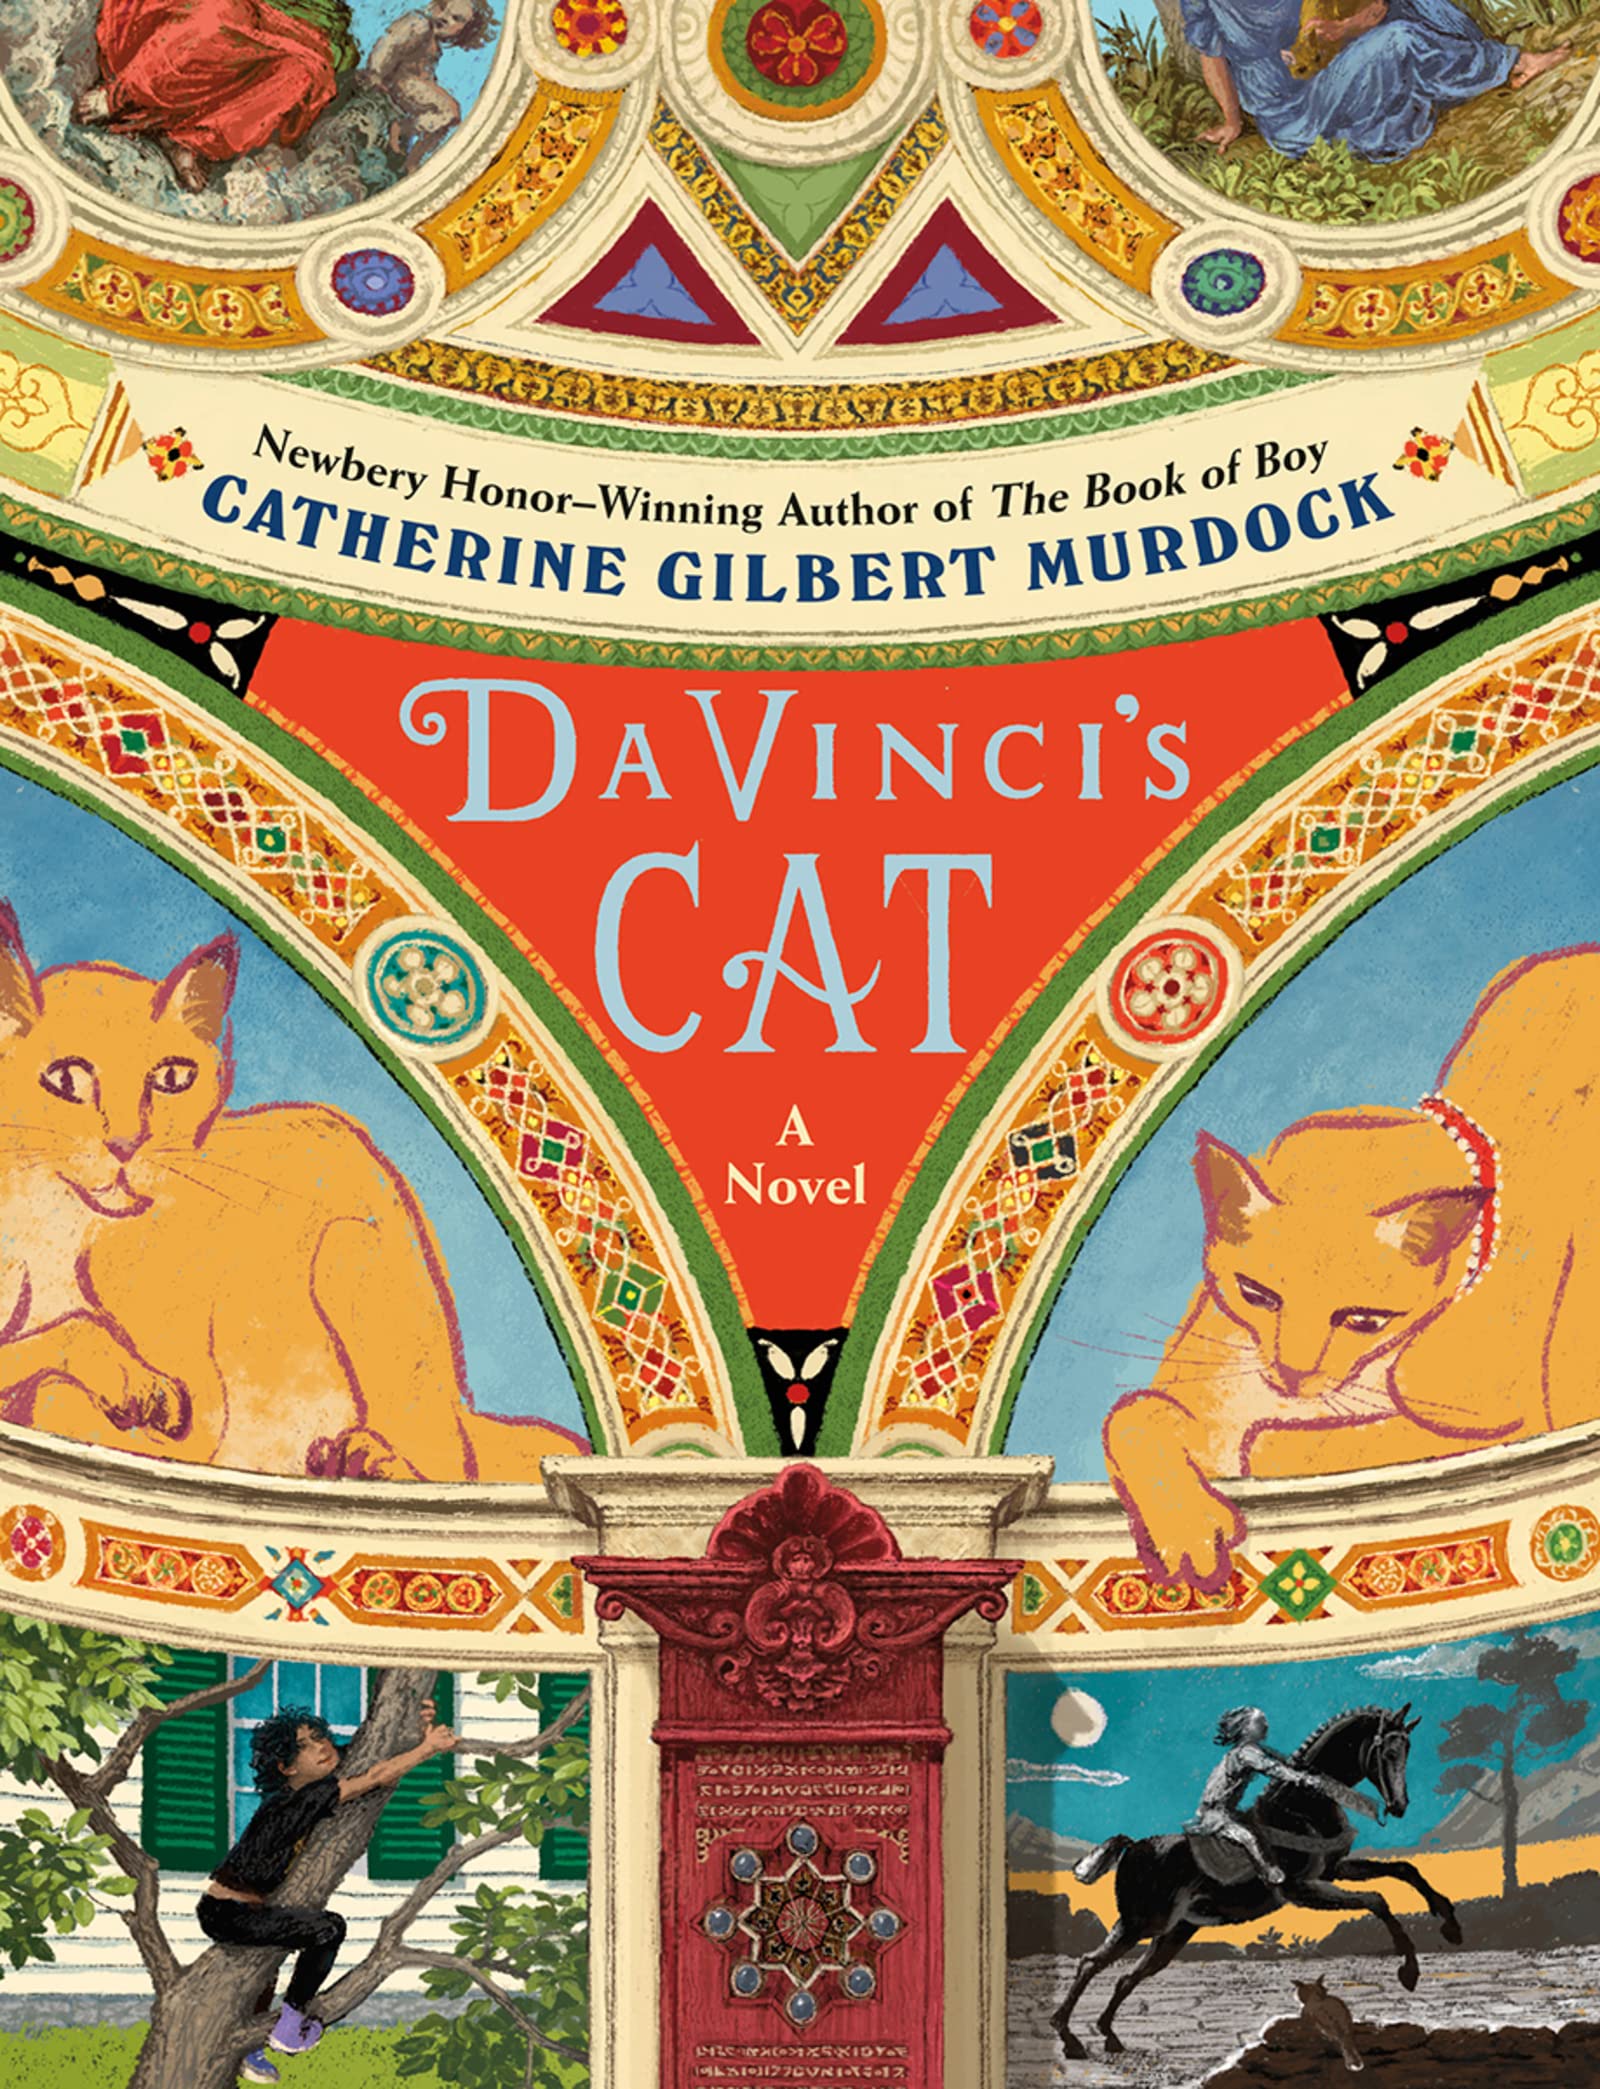 Da Vinci’s Cat by Catherine Gilbert Murdock